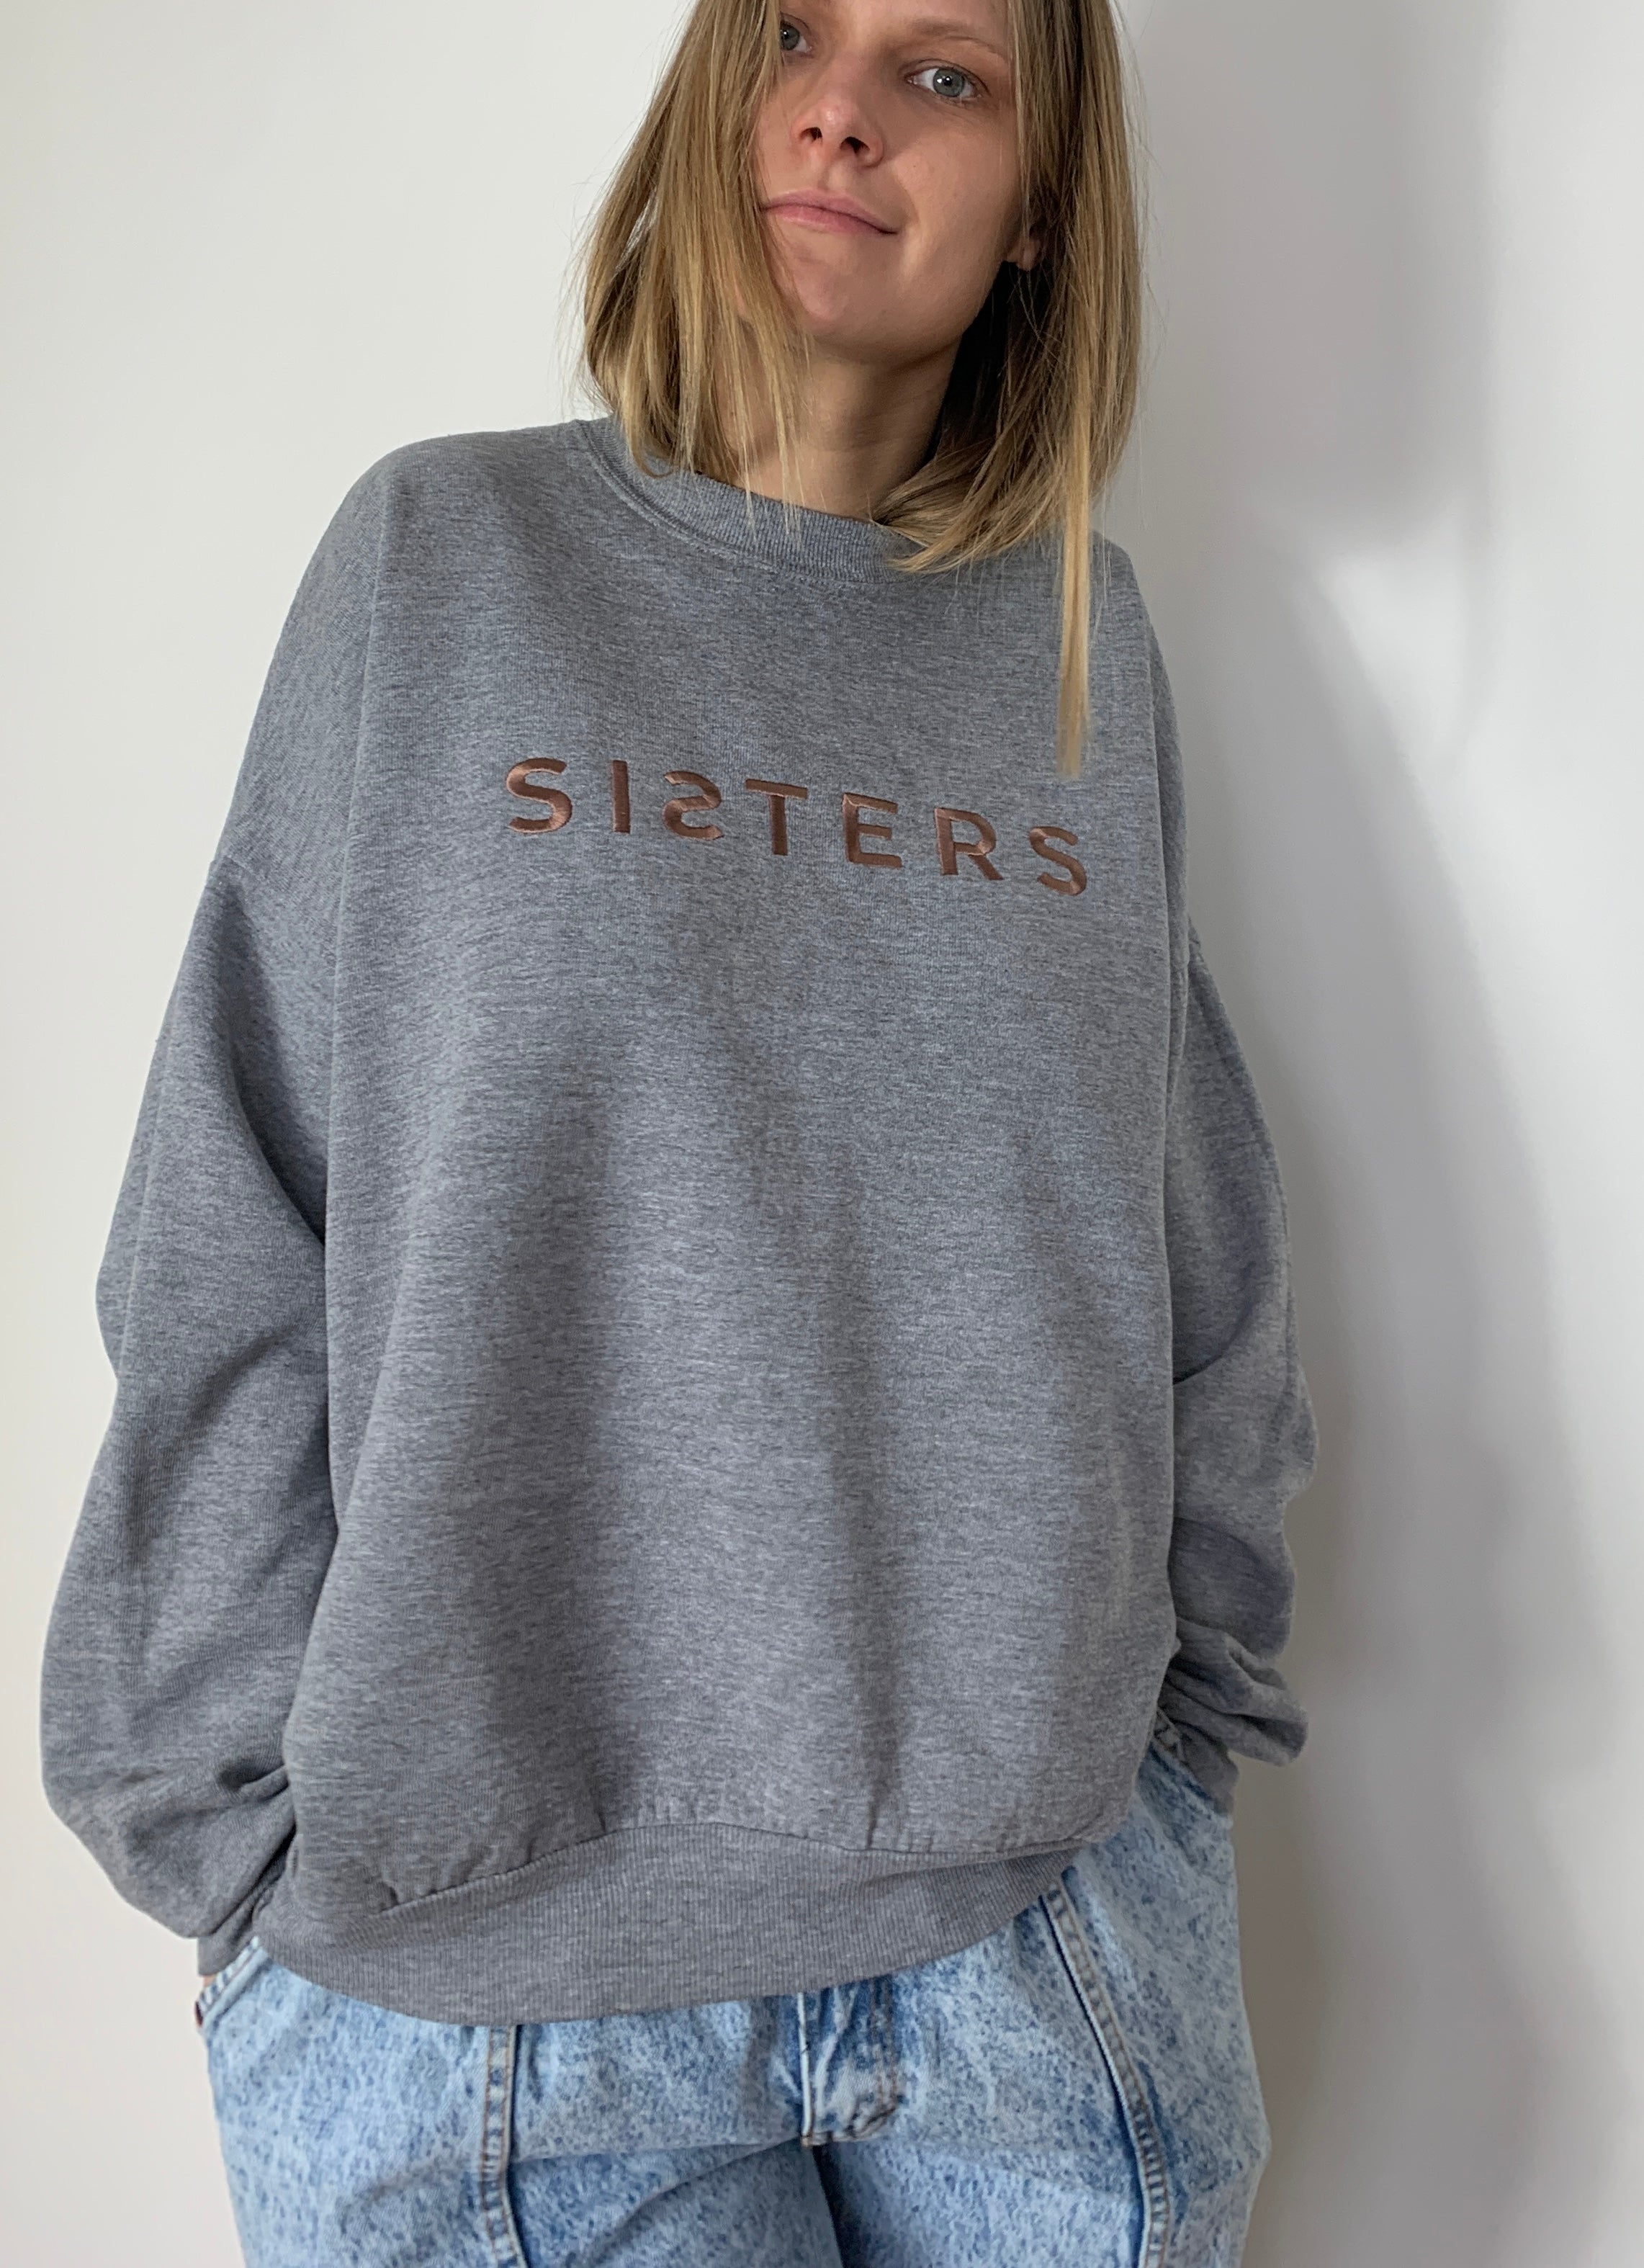 SISTERS embroidered sweatshirt Large / X Large